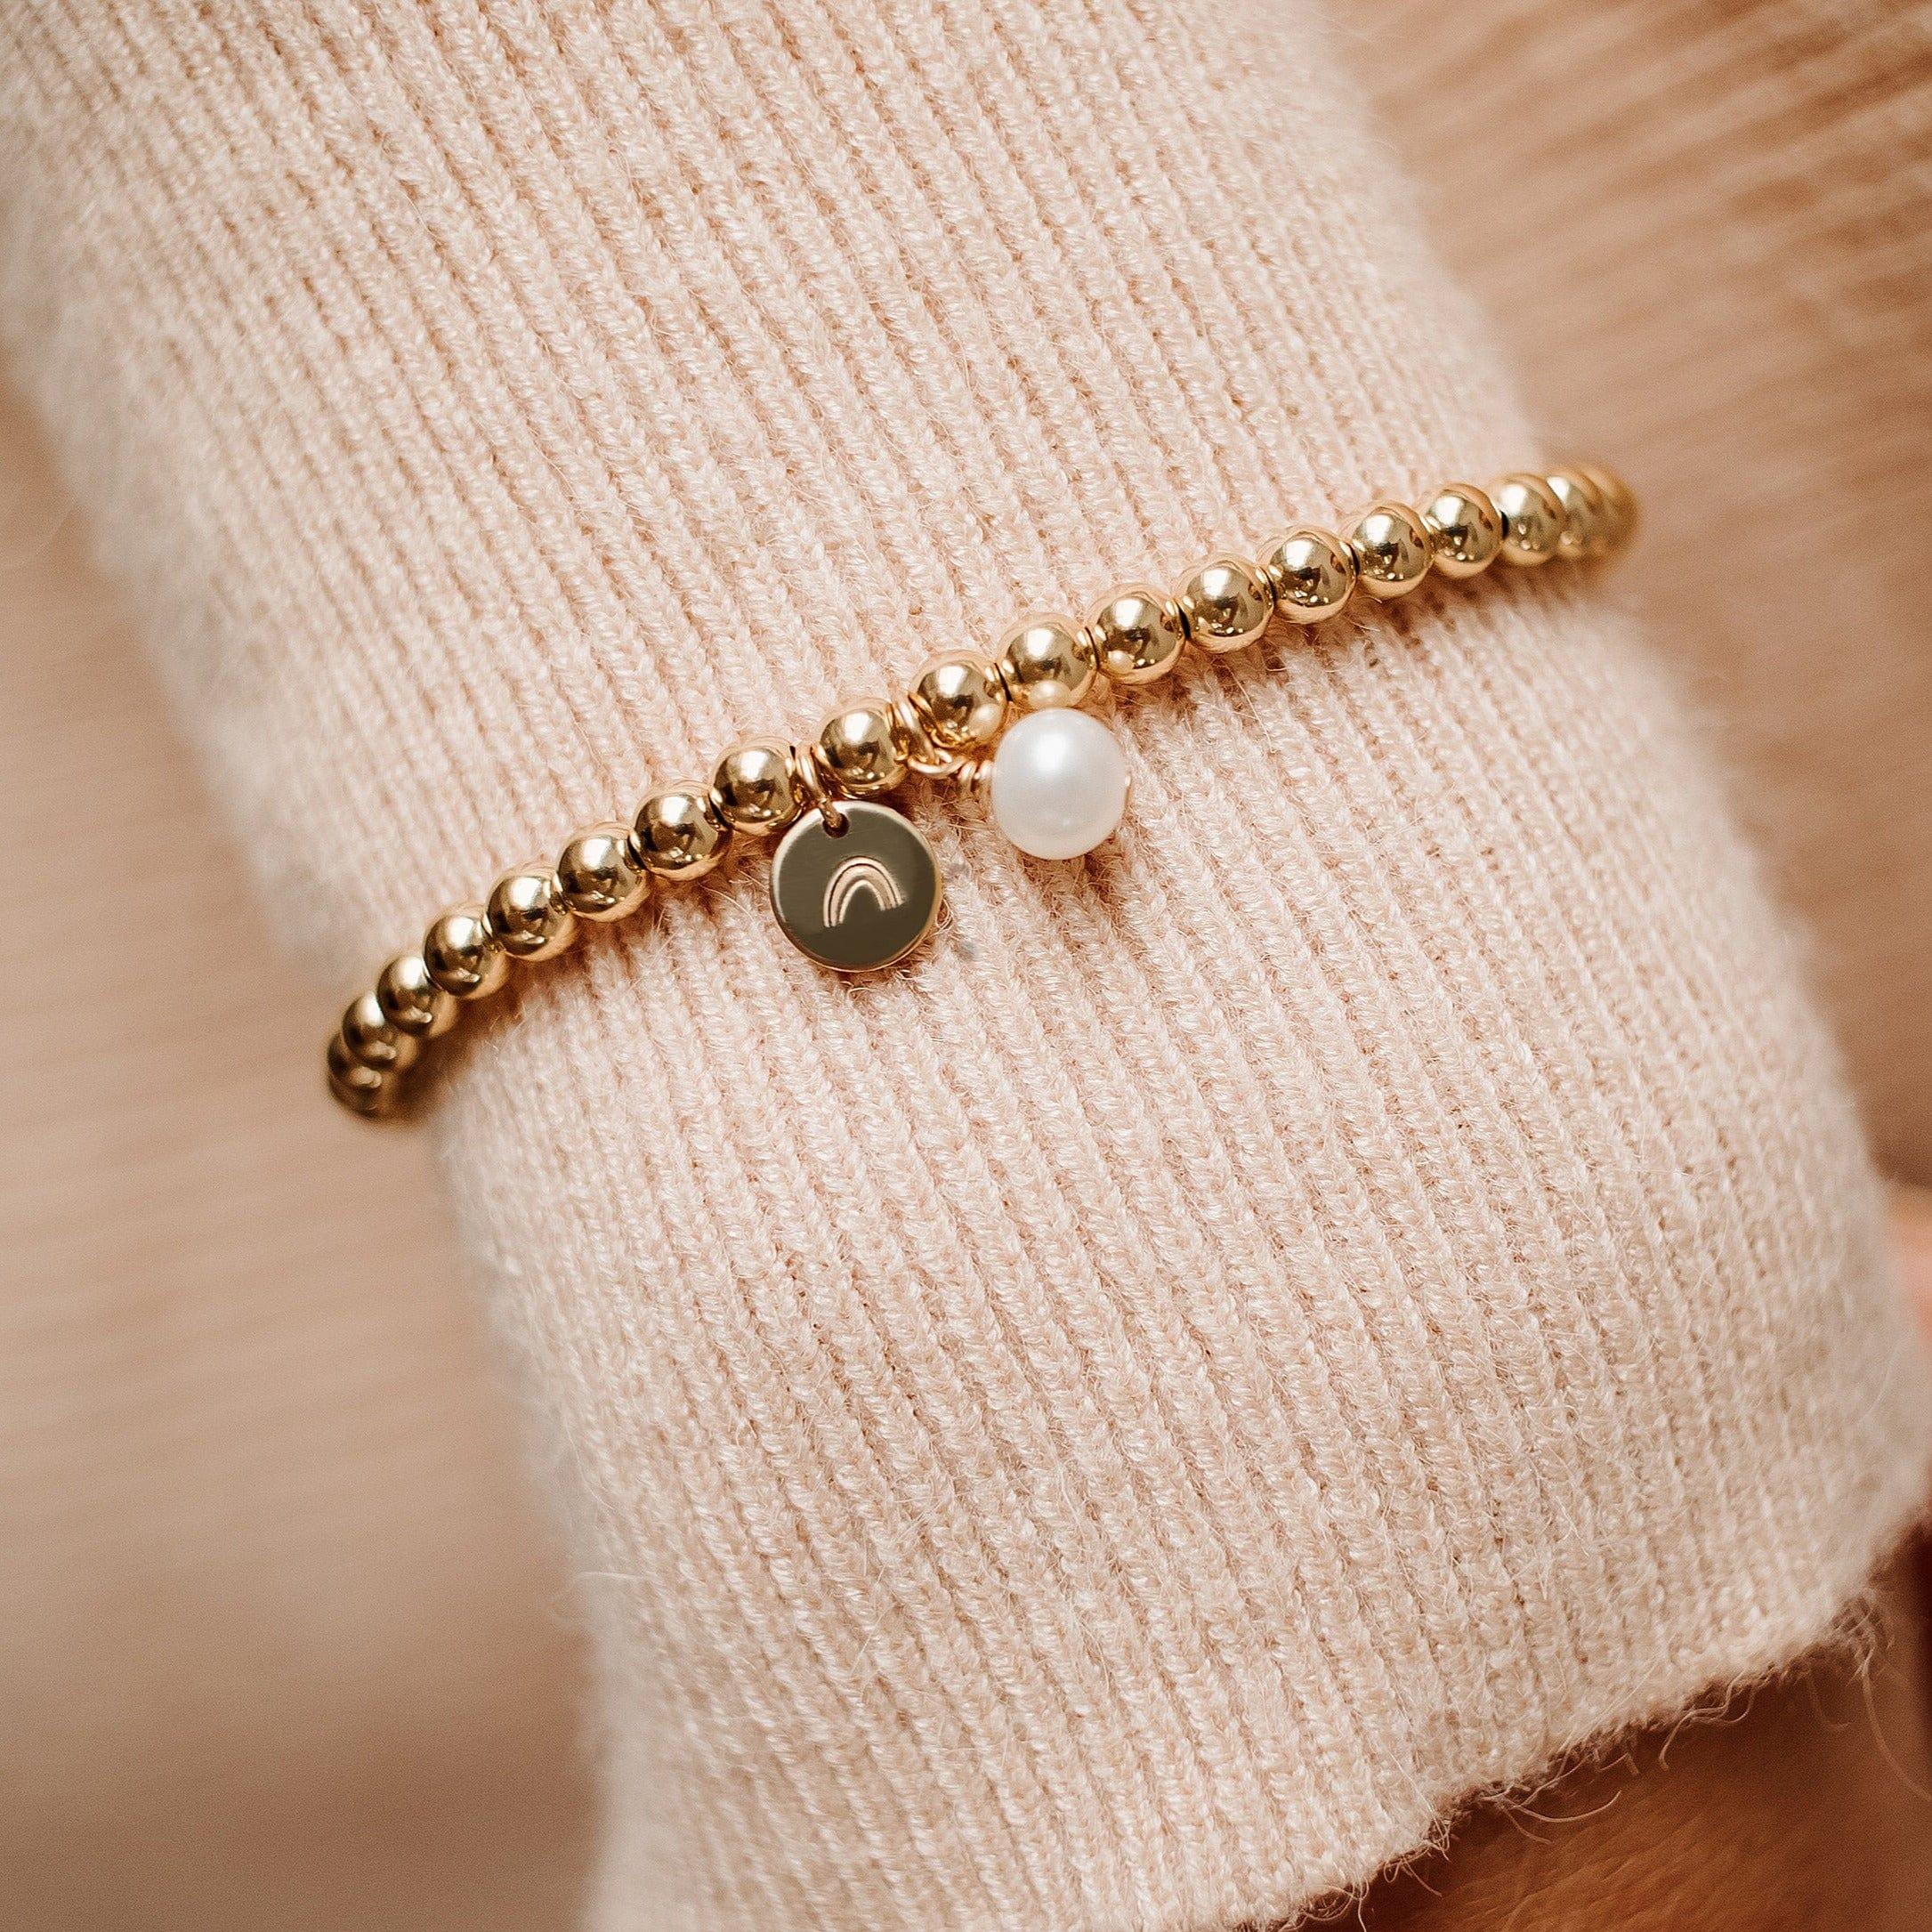 Original Personalized Stretch Bracelet - Nolia Jewelry - Meaningful + Sustainably Handcrafted Jewelry